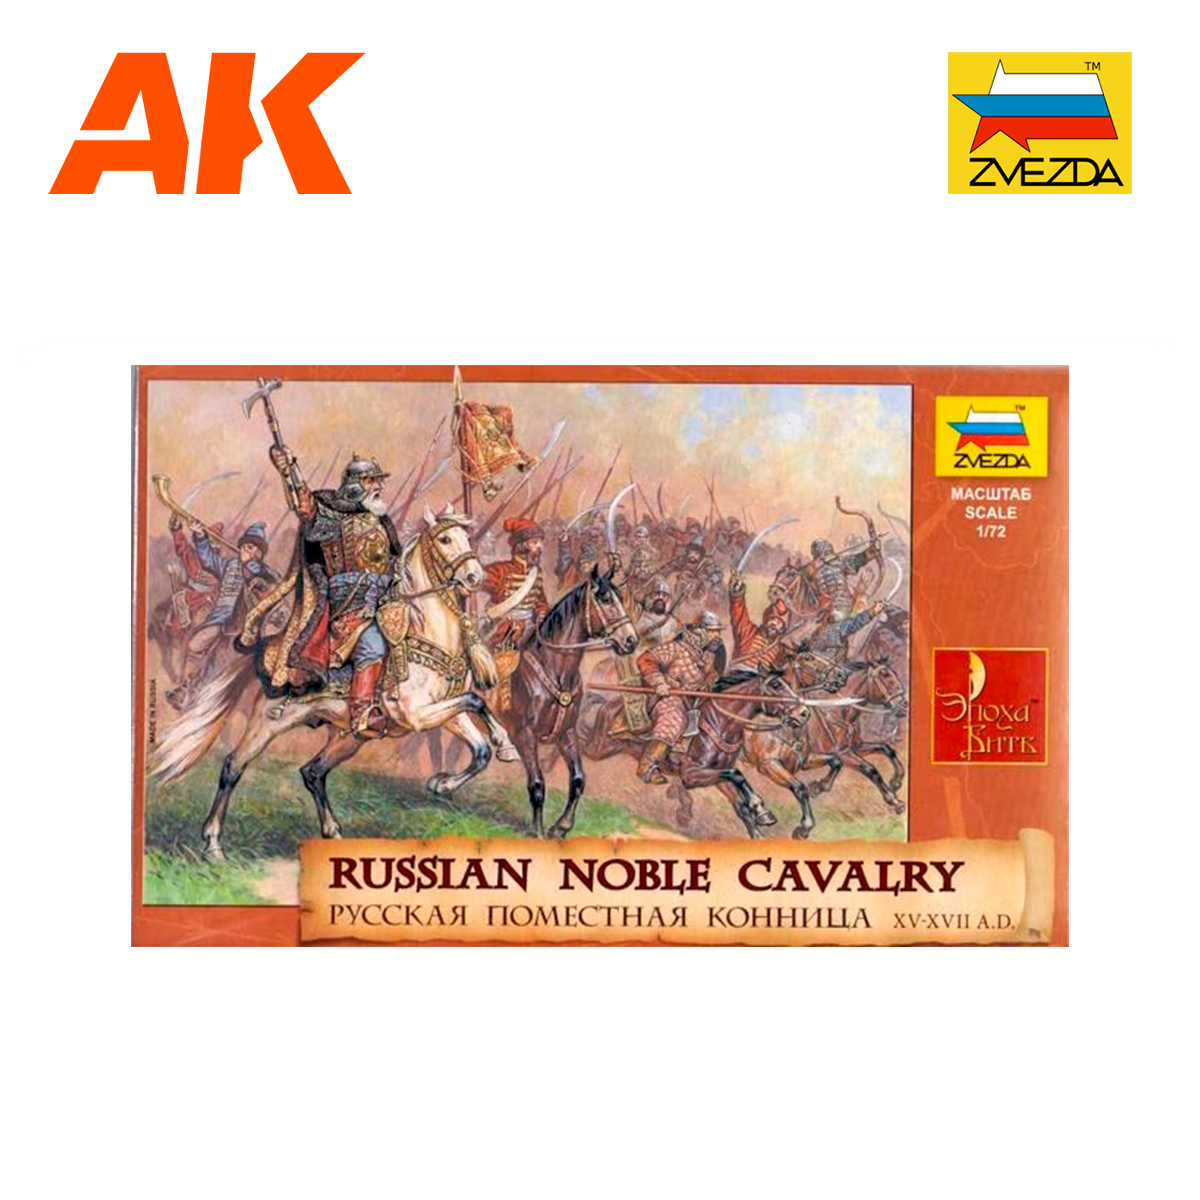 ZVEZDA 1/72 Russian Noble Cavalry – XV-XVII centuries AD